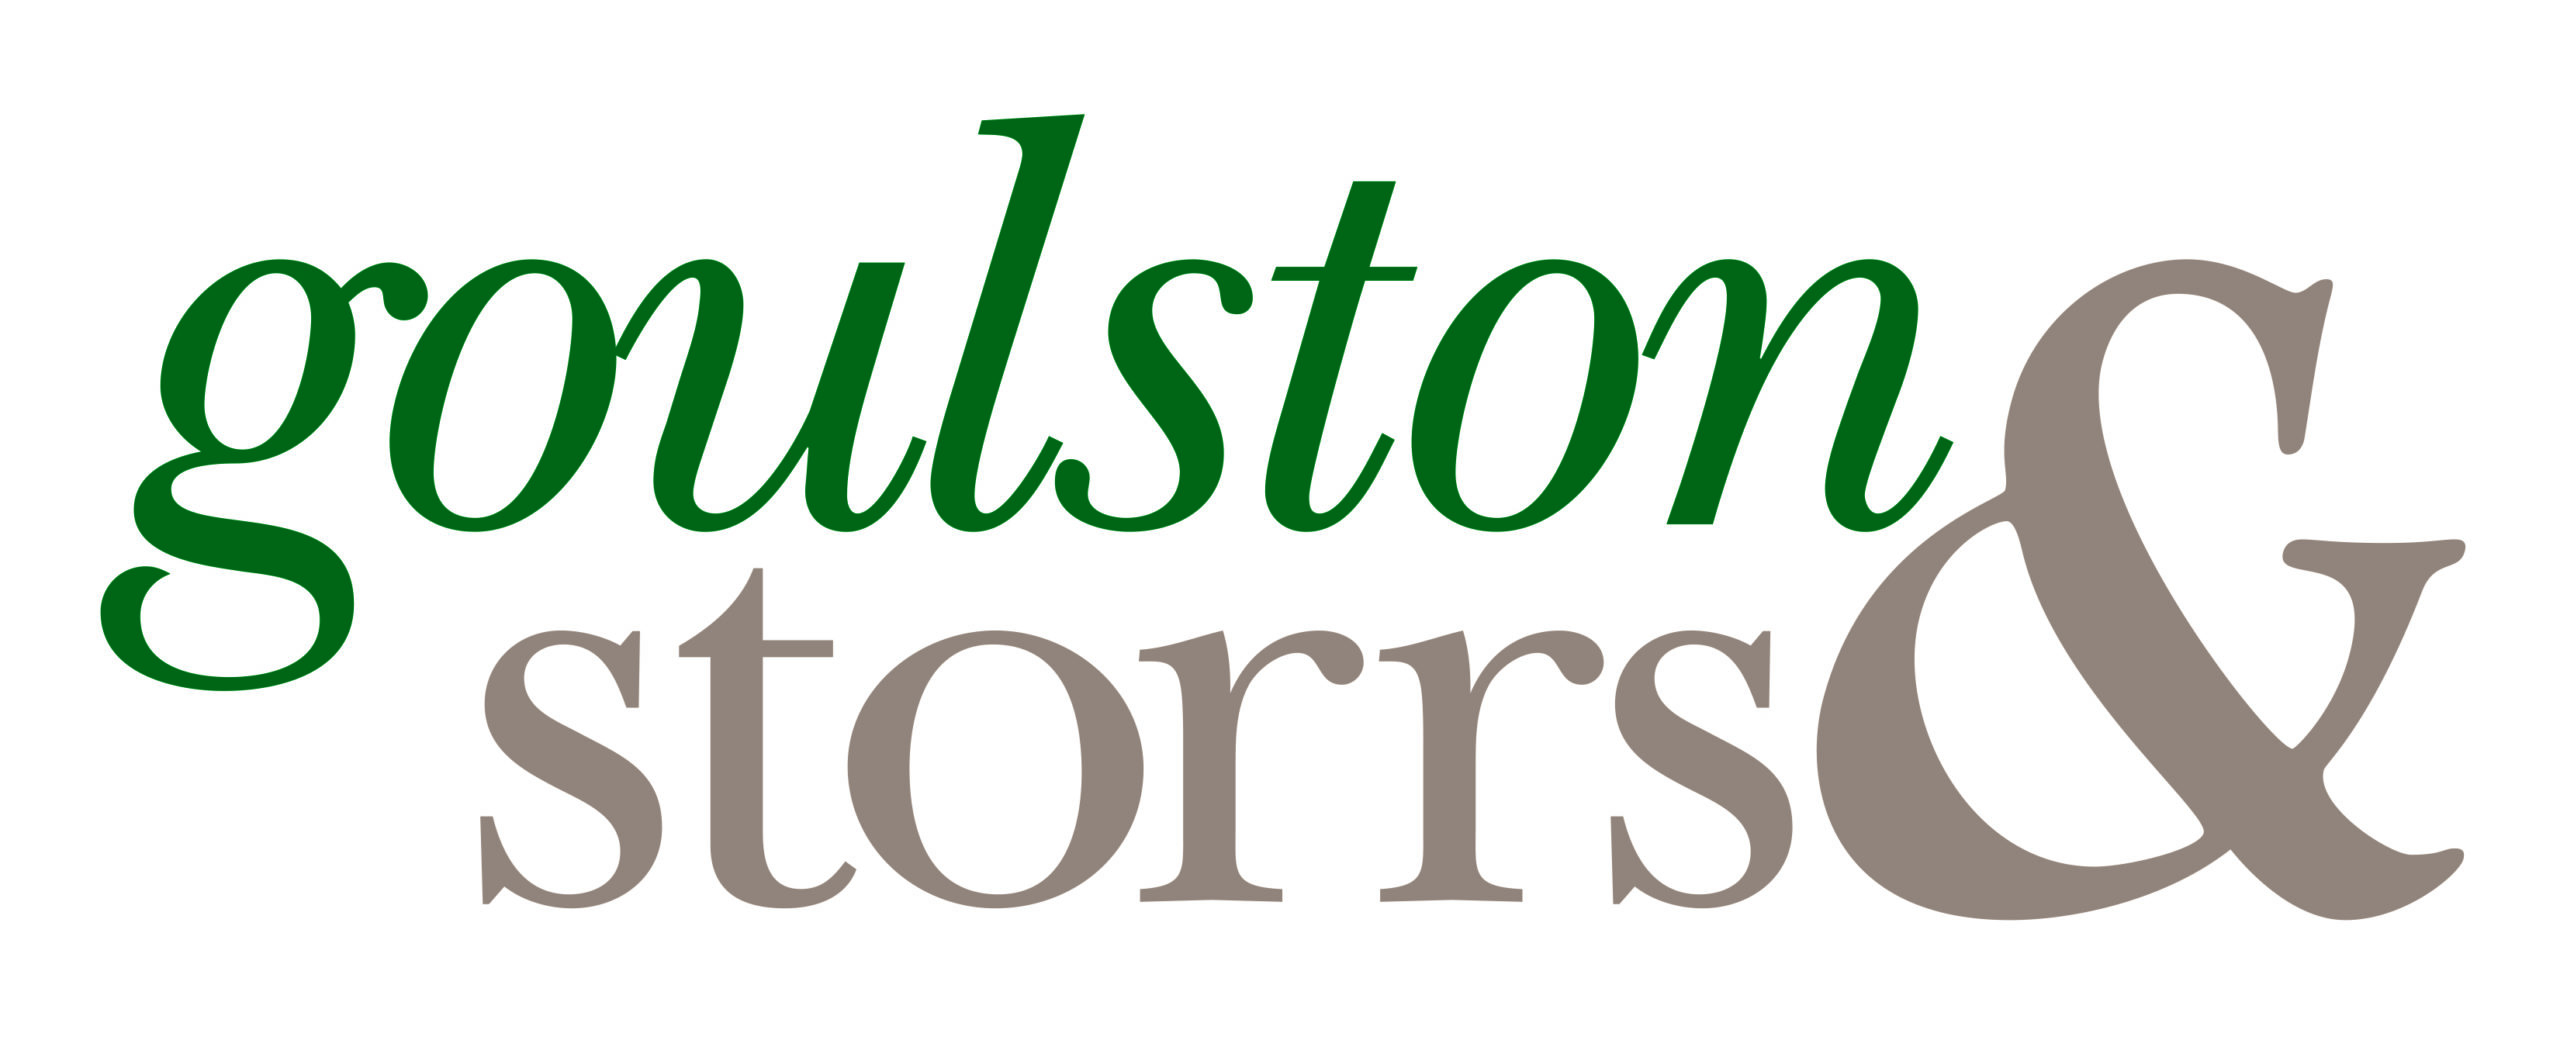 Goulston & Storrs Logo